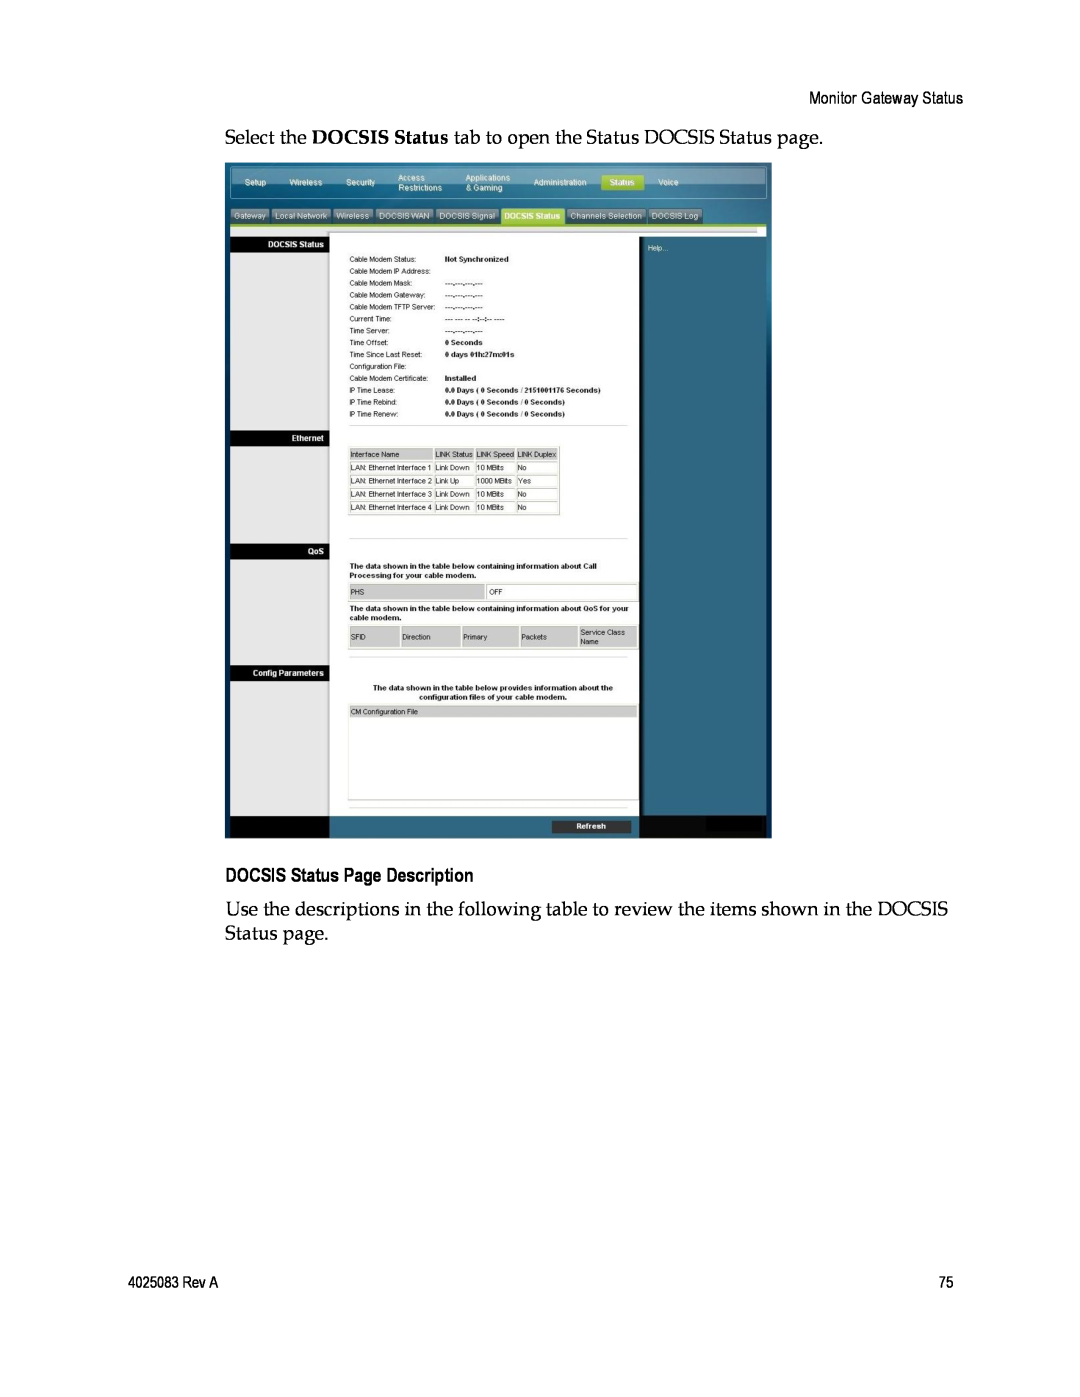 Cisco Systems EPC3827 DOCSIS Status Page Description, Select the DOCSIS Status tab to open the Status DOCSIS Status page 